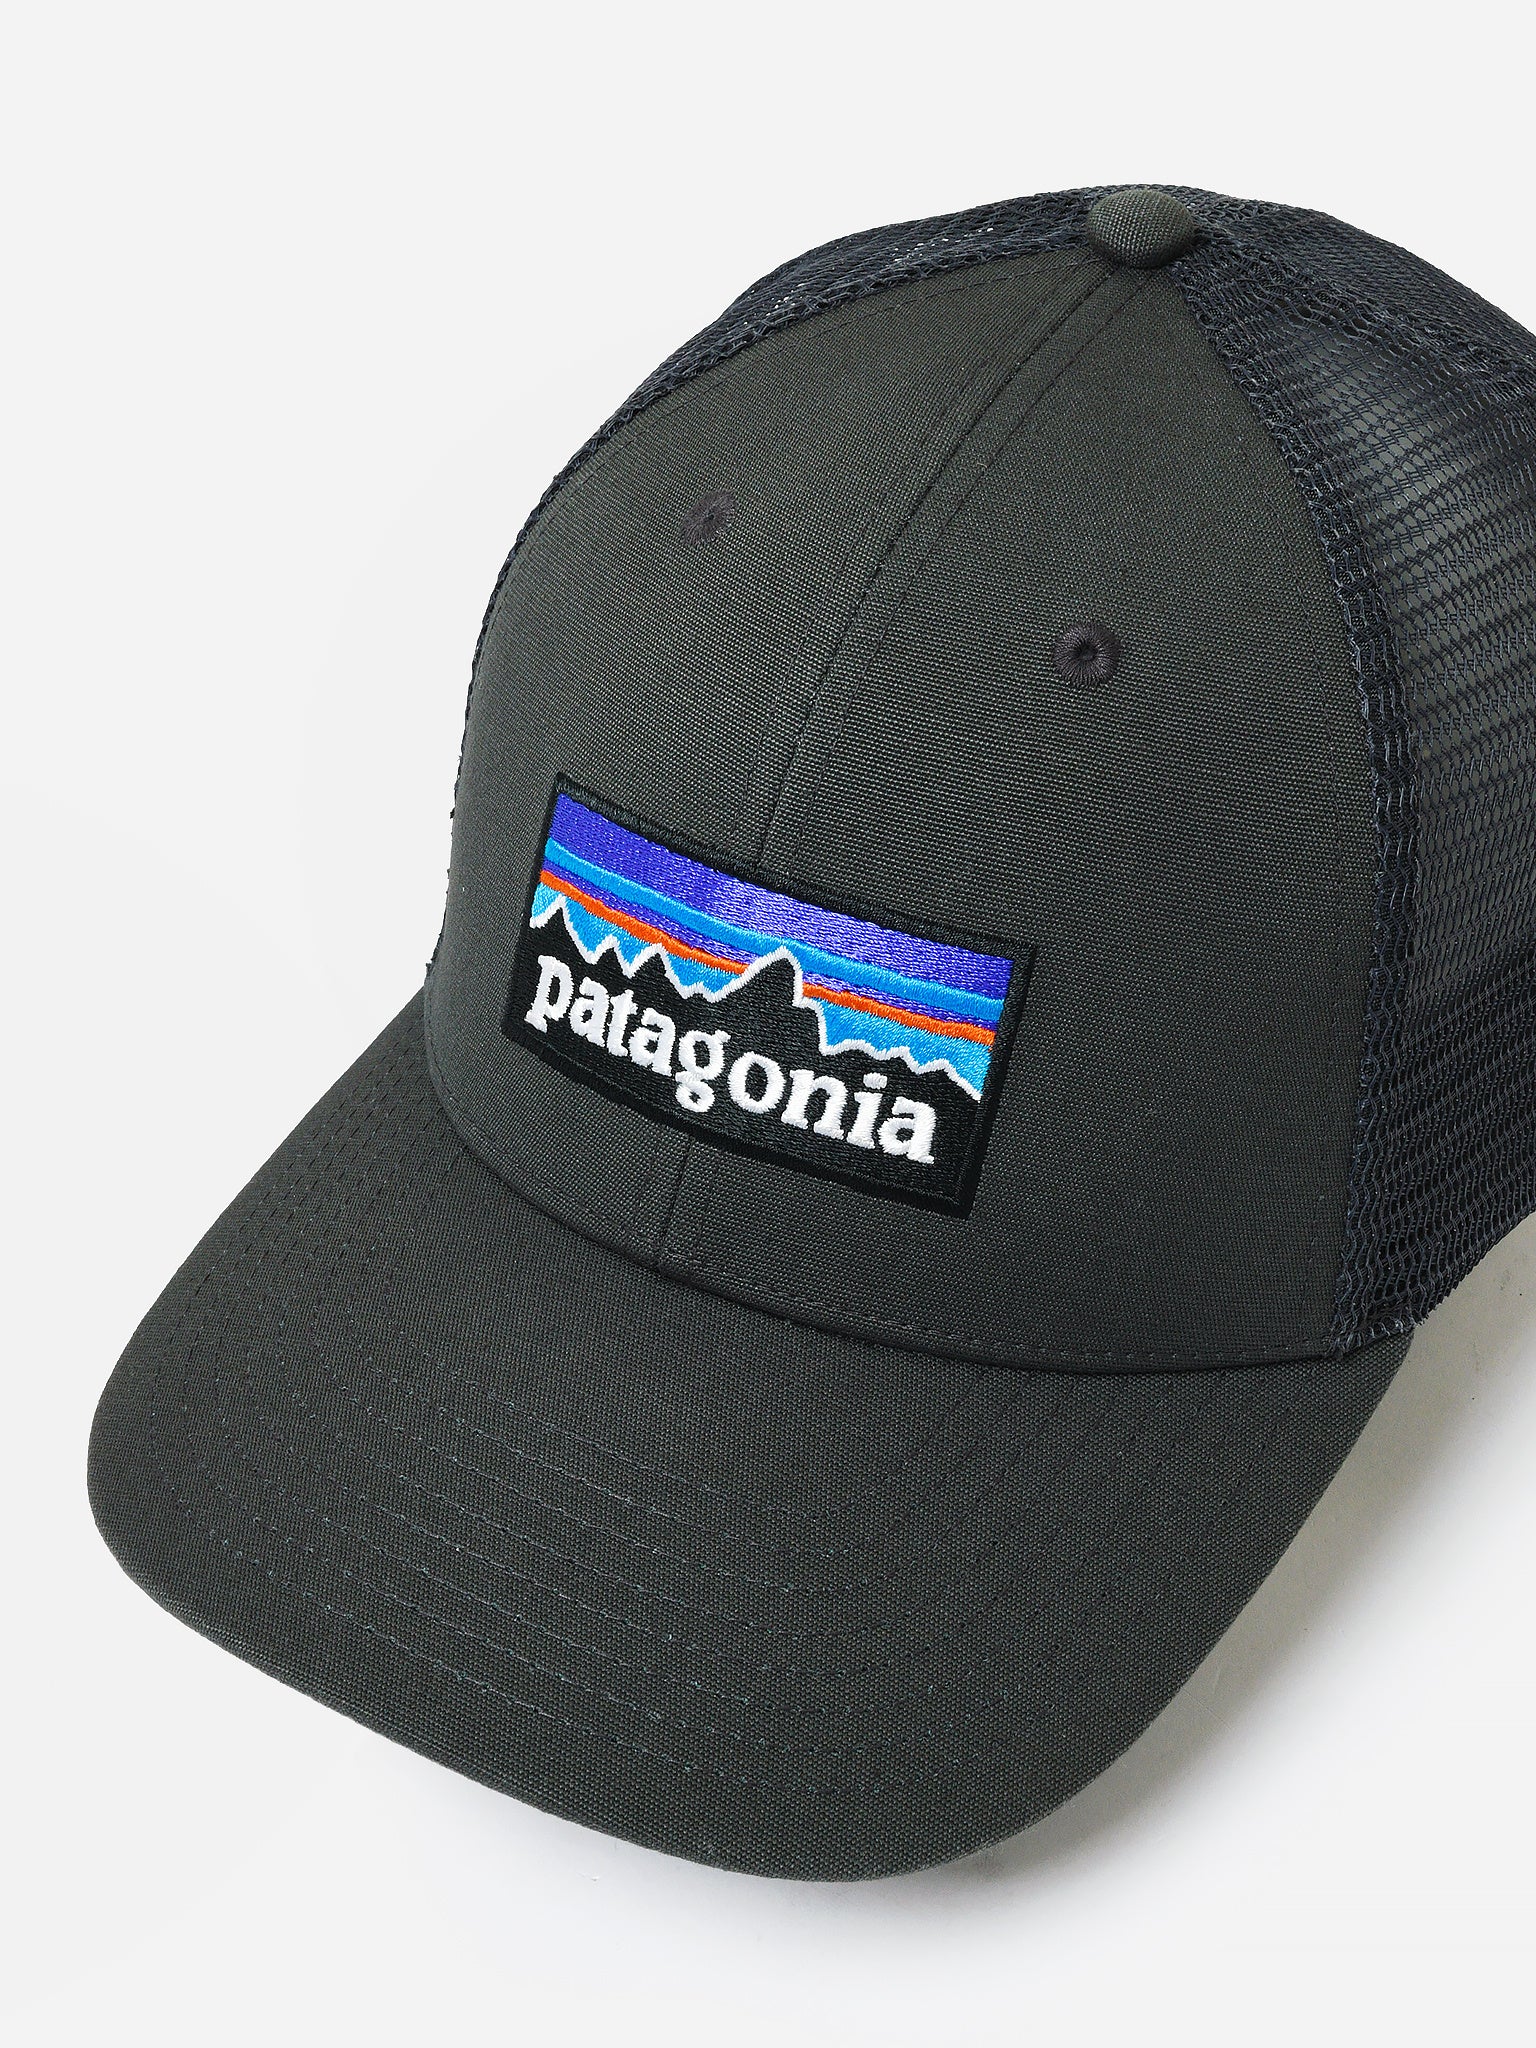 Patagonia, P-6 Logo Lopro Trucker Hat, Casquette De Baseball